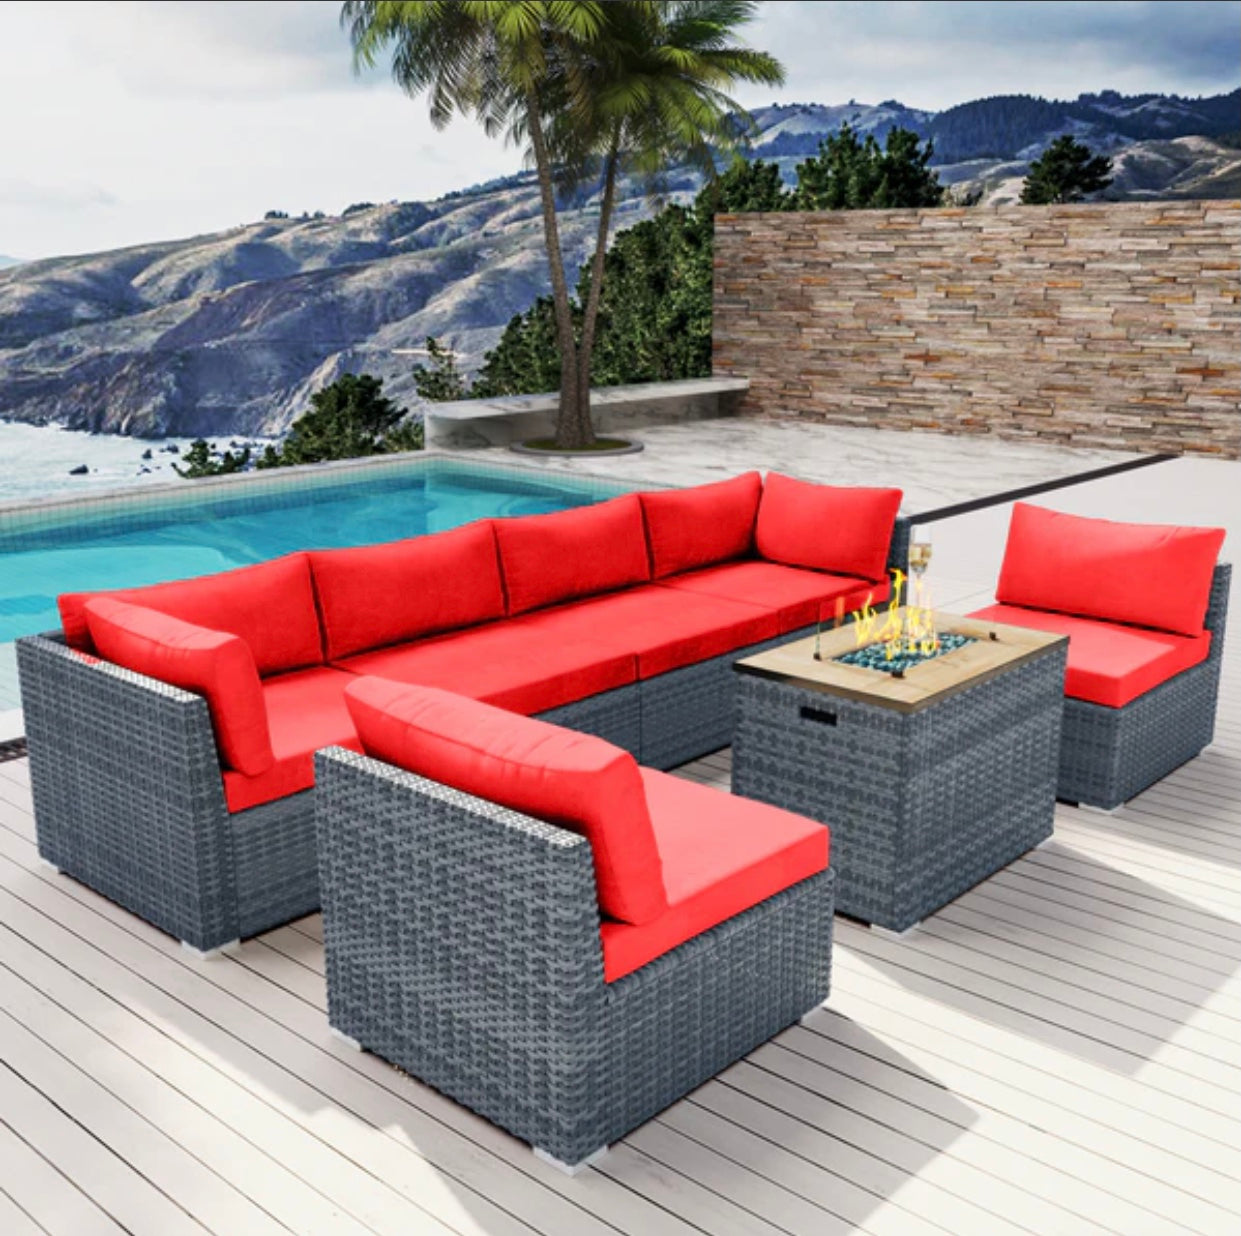 Crimson Red 7 Seven piece Outdoor Patio Furniture with Propane Fire Pit Gray Wicker Santa Monica Beach